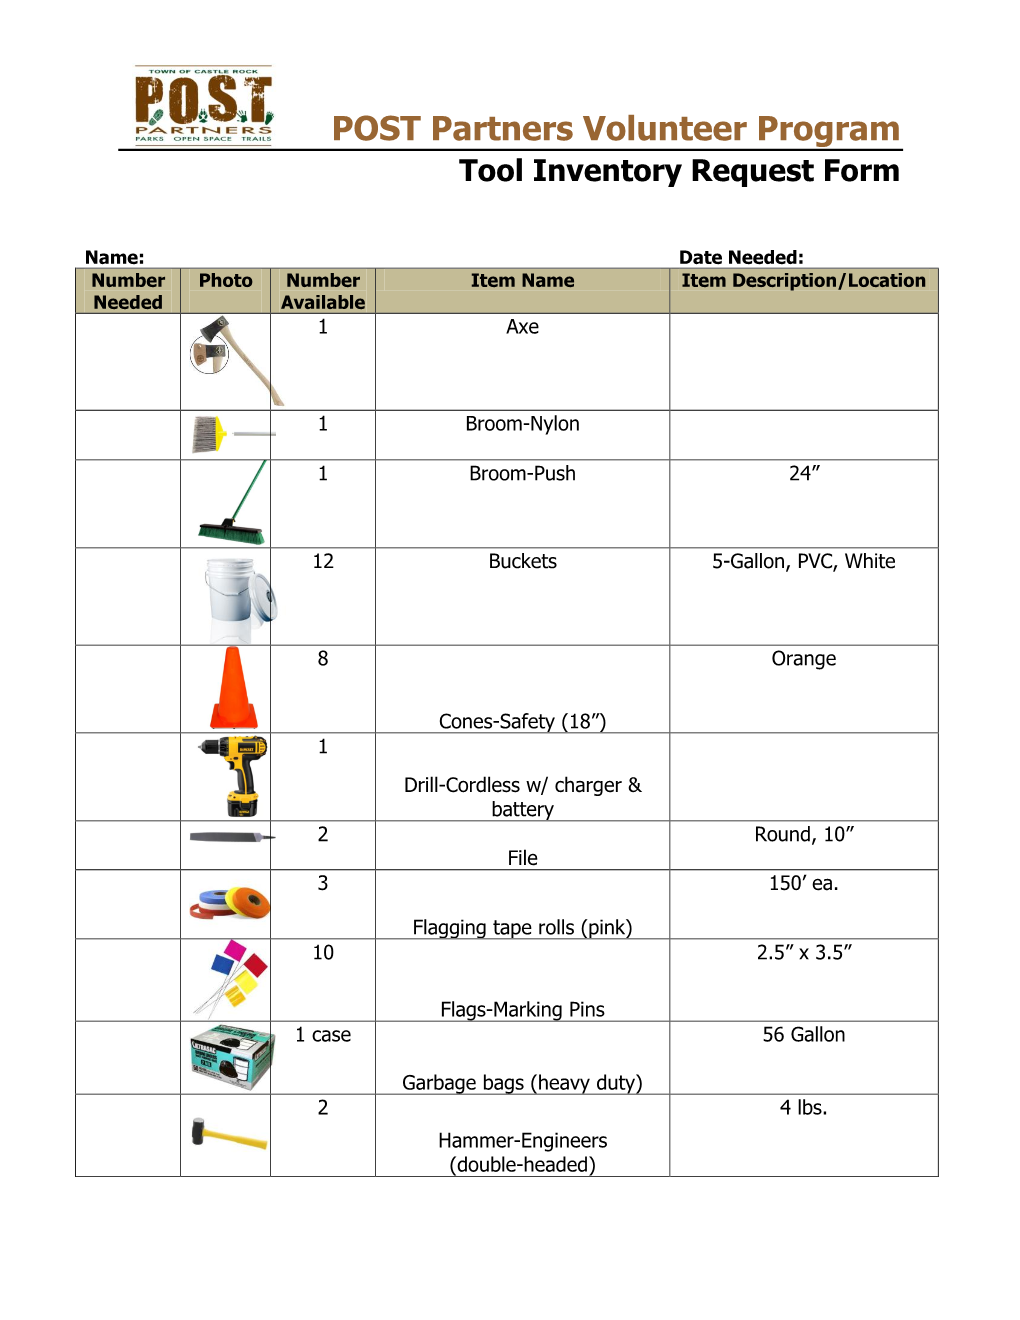 POST Partners Volunteer Program Tool Inventory Request Form